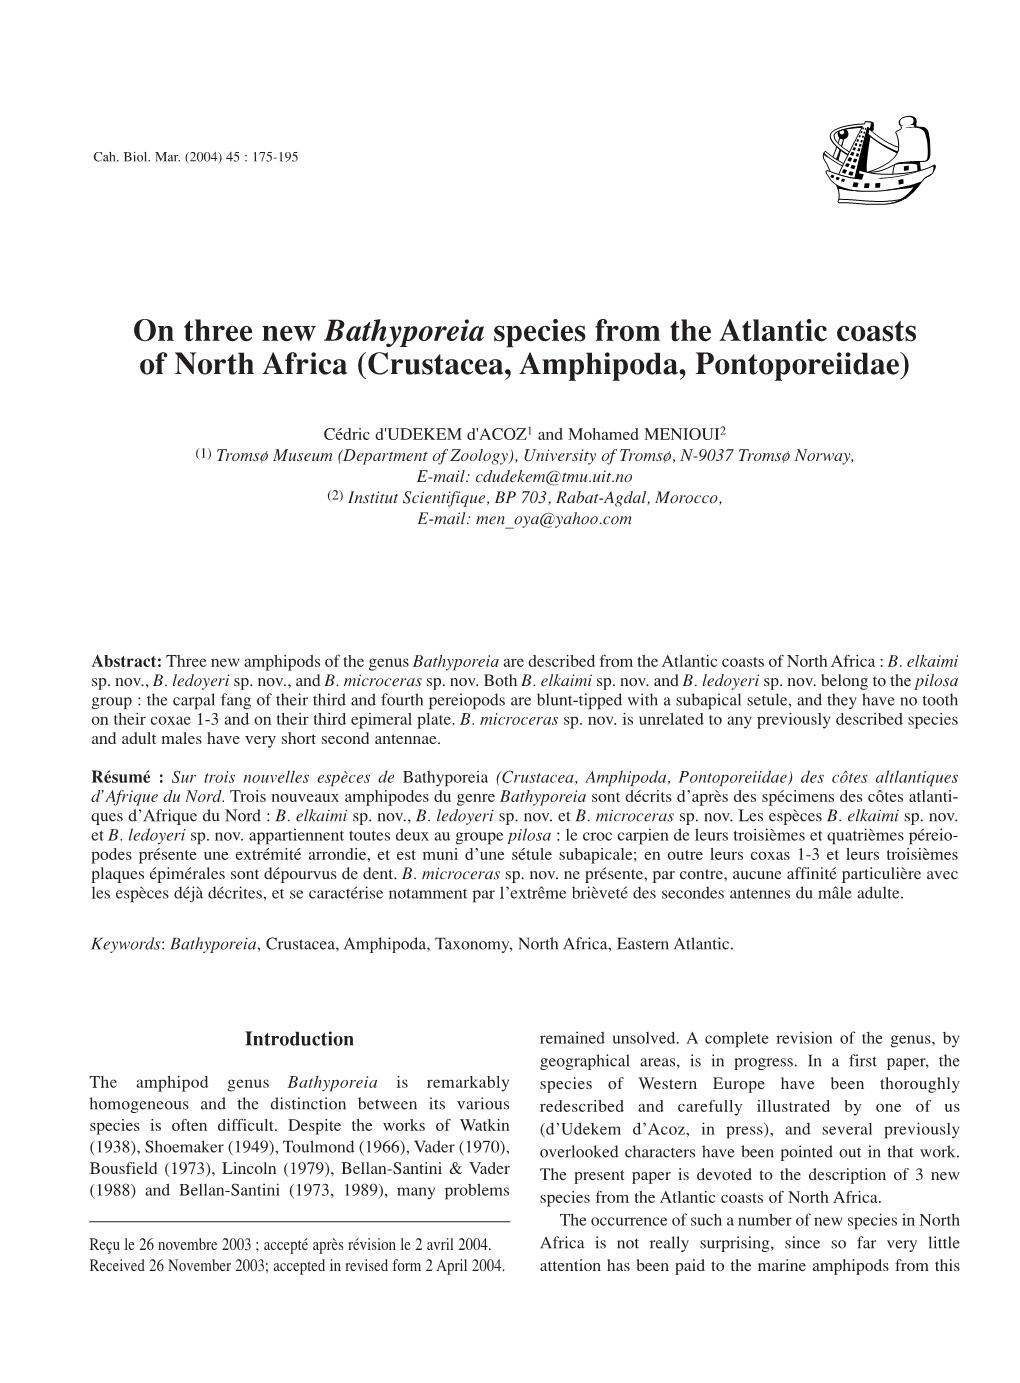 On Three New Bathyporeia Species from the Atlantic Coasts of North Africa (Crustacea, Amphipoda, Pontoporeiidae)